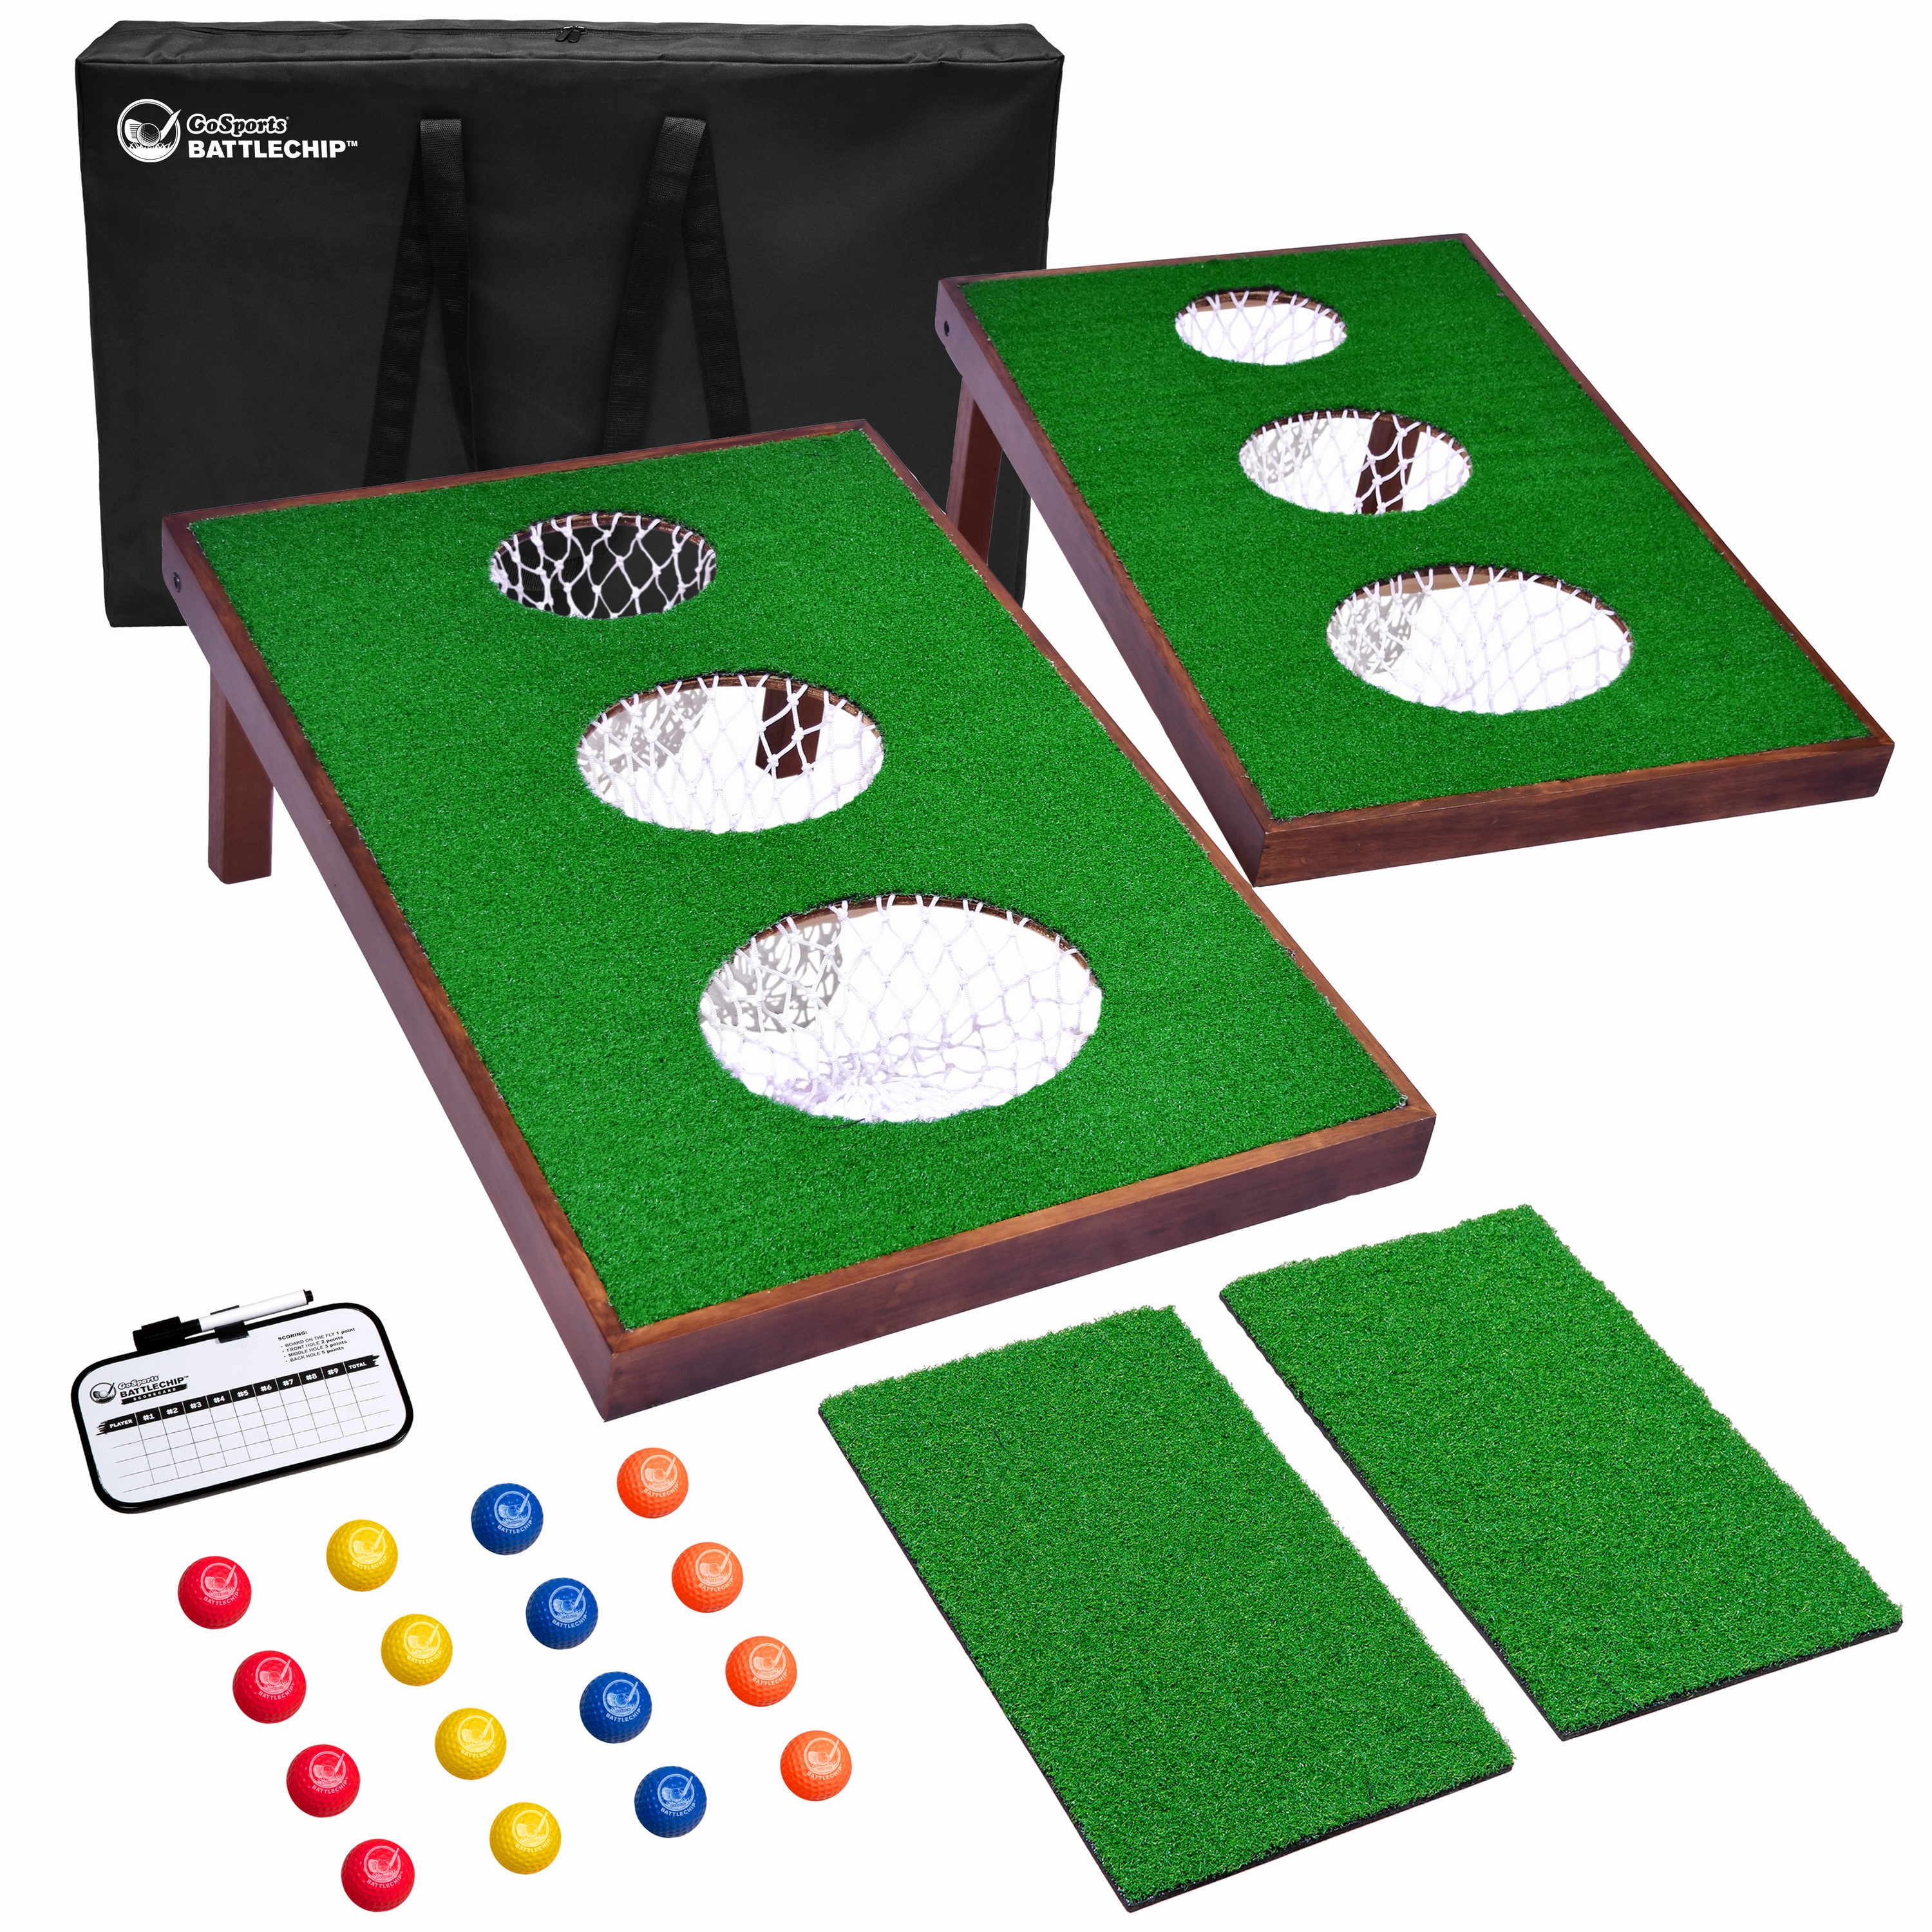 GoSports BattleChip MATCH Backyard Golf Cornhole Game